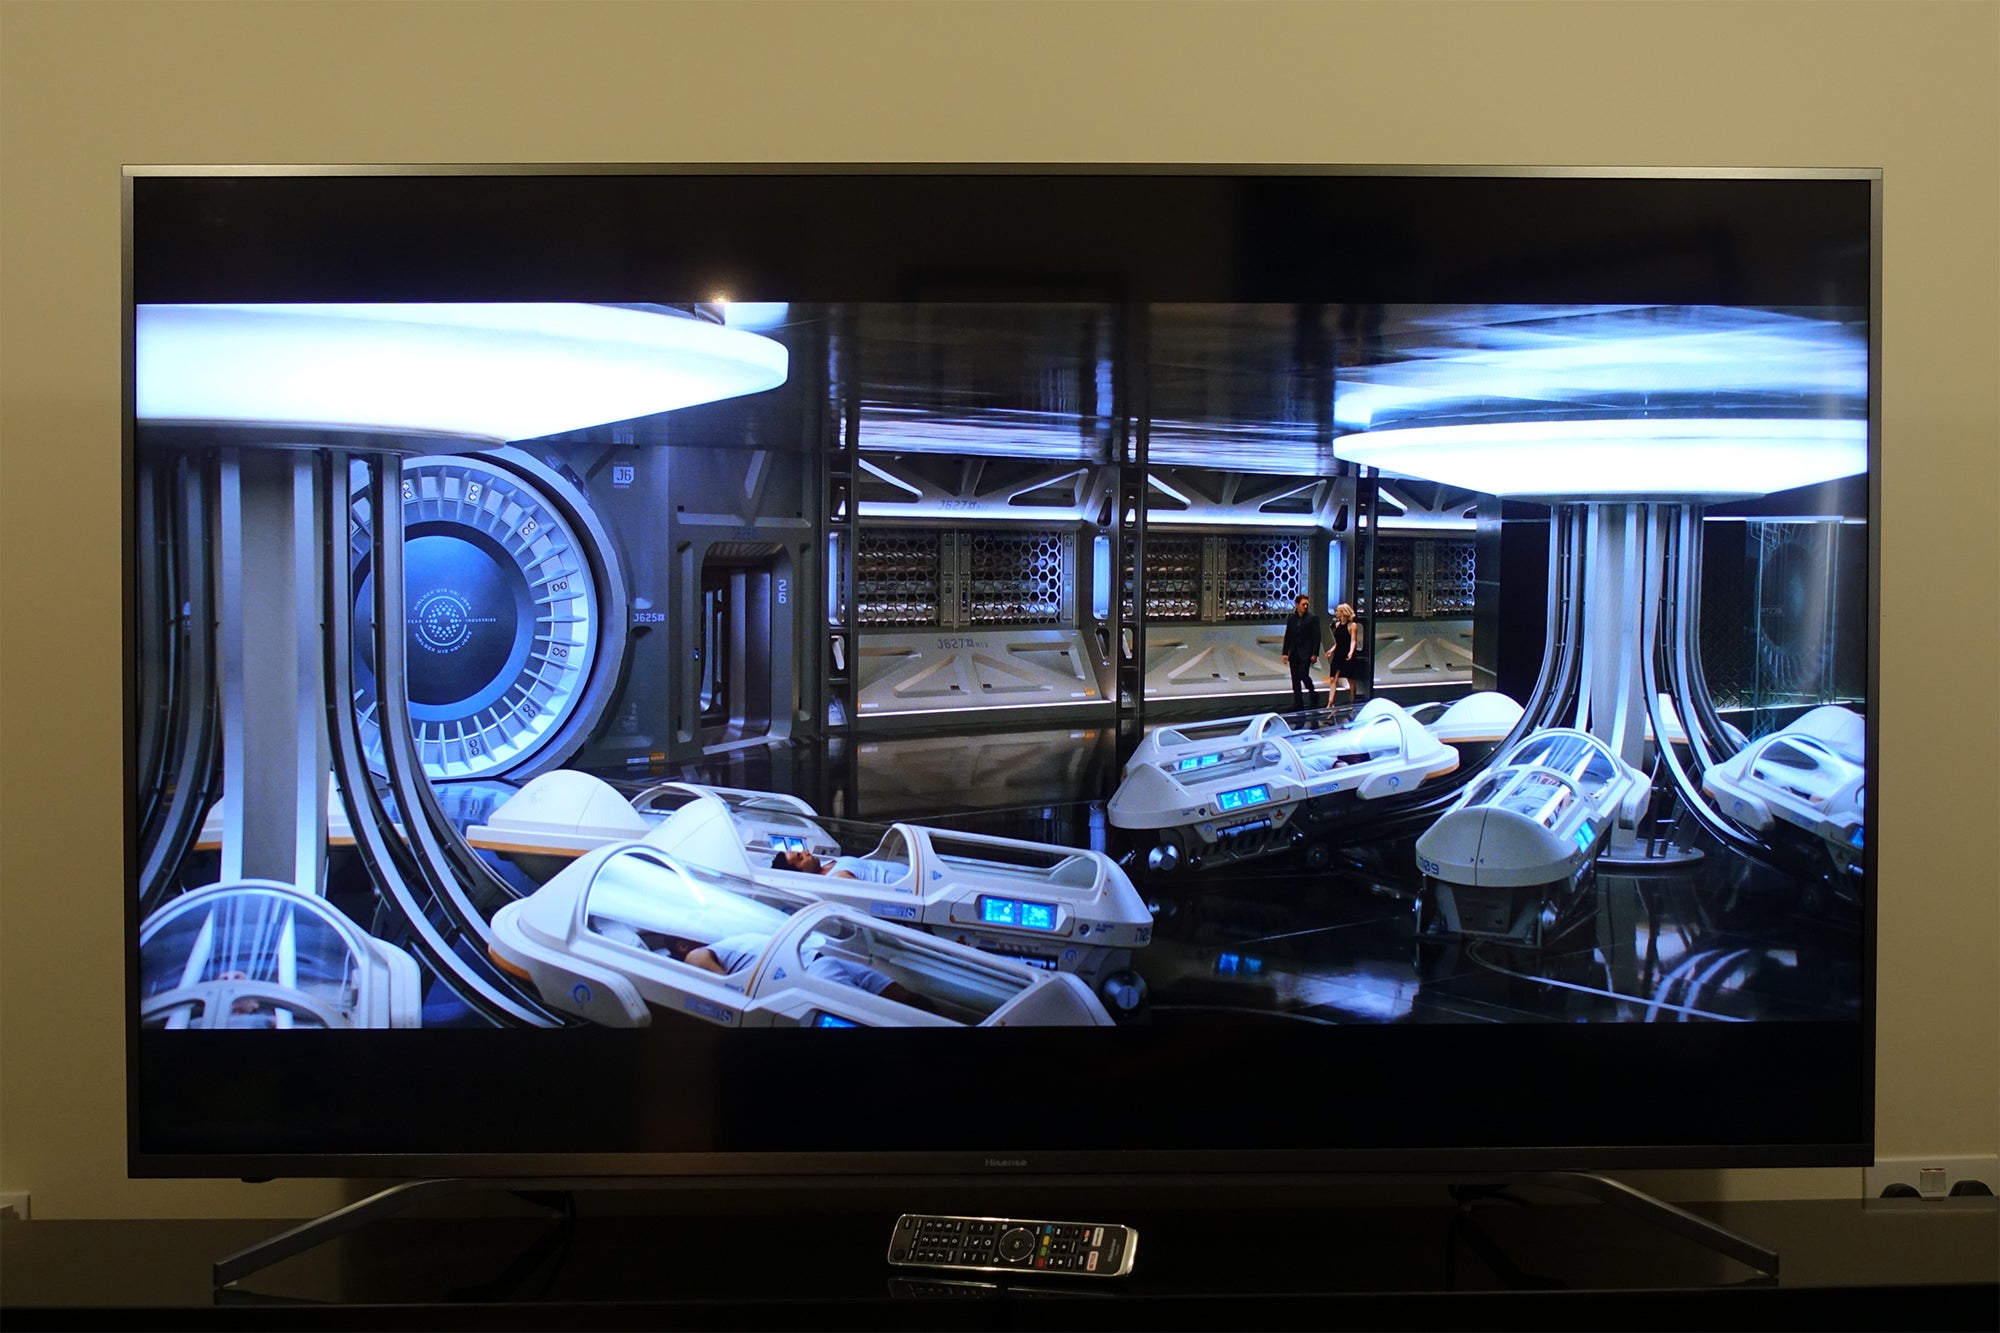 Hisense H70NU9700 TV displaying sci-fi movie scene.